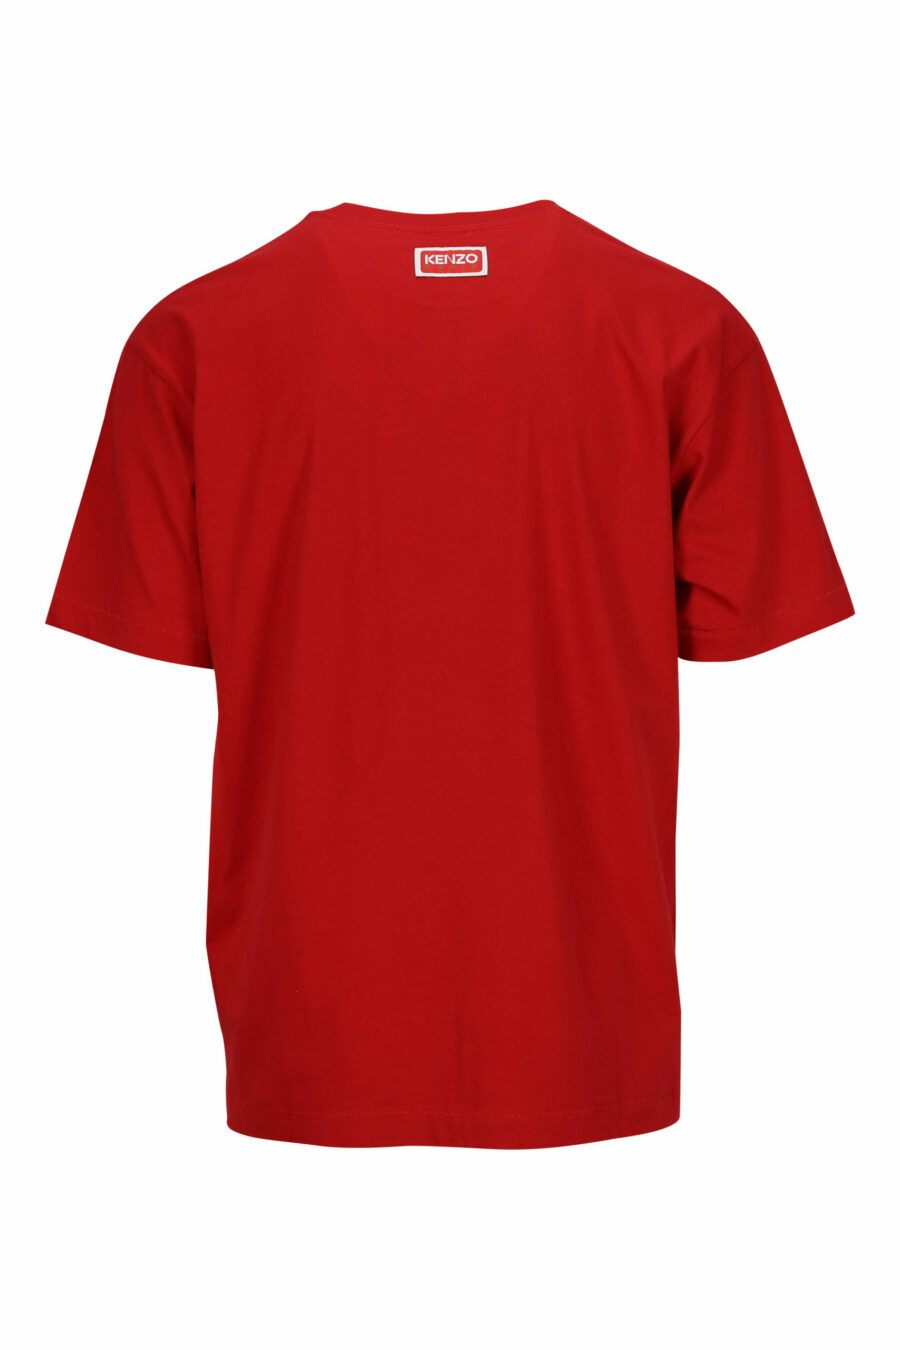 Camiseta roja "oversize" logo grande elefante relieve - 3612230568877 1 scaled